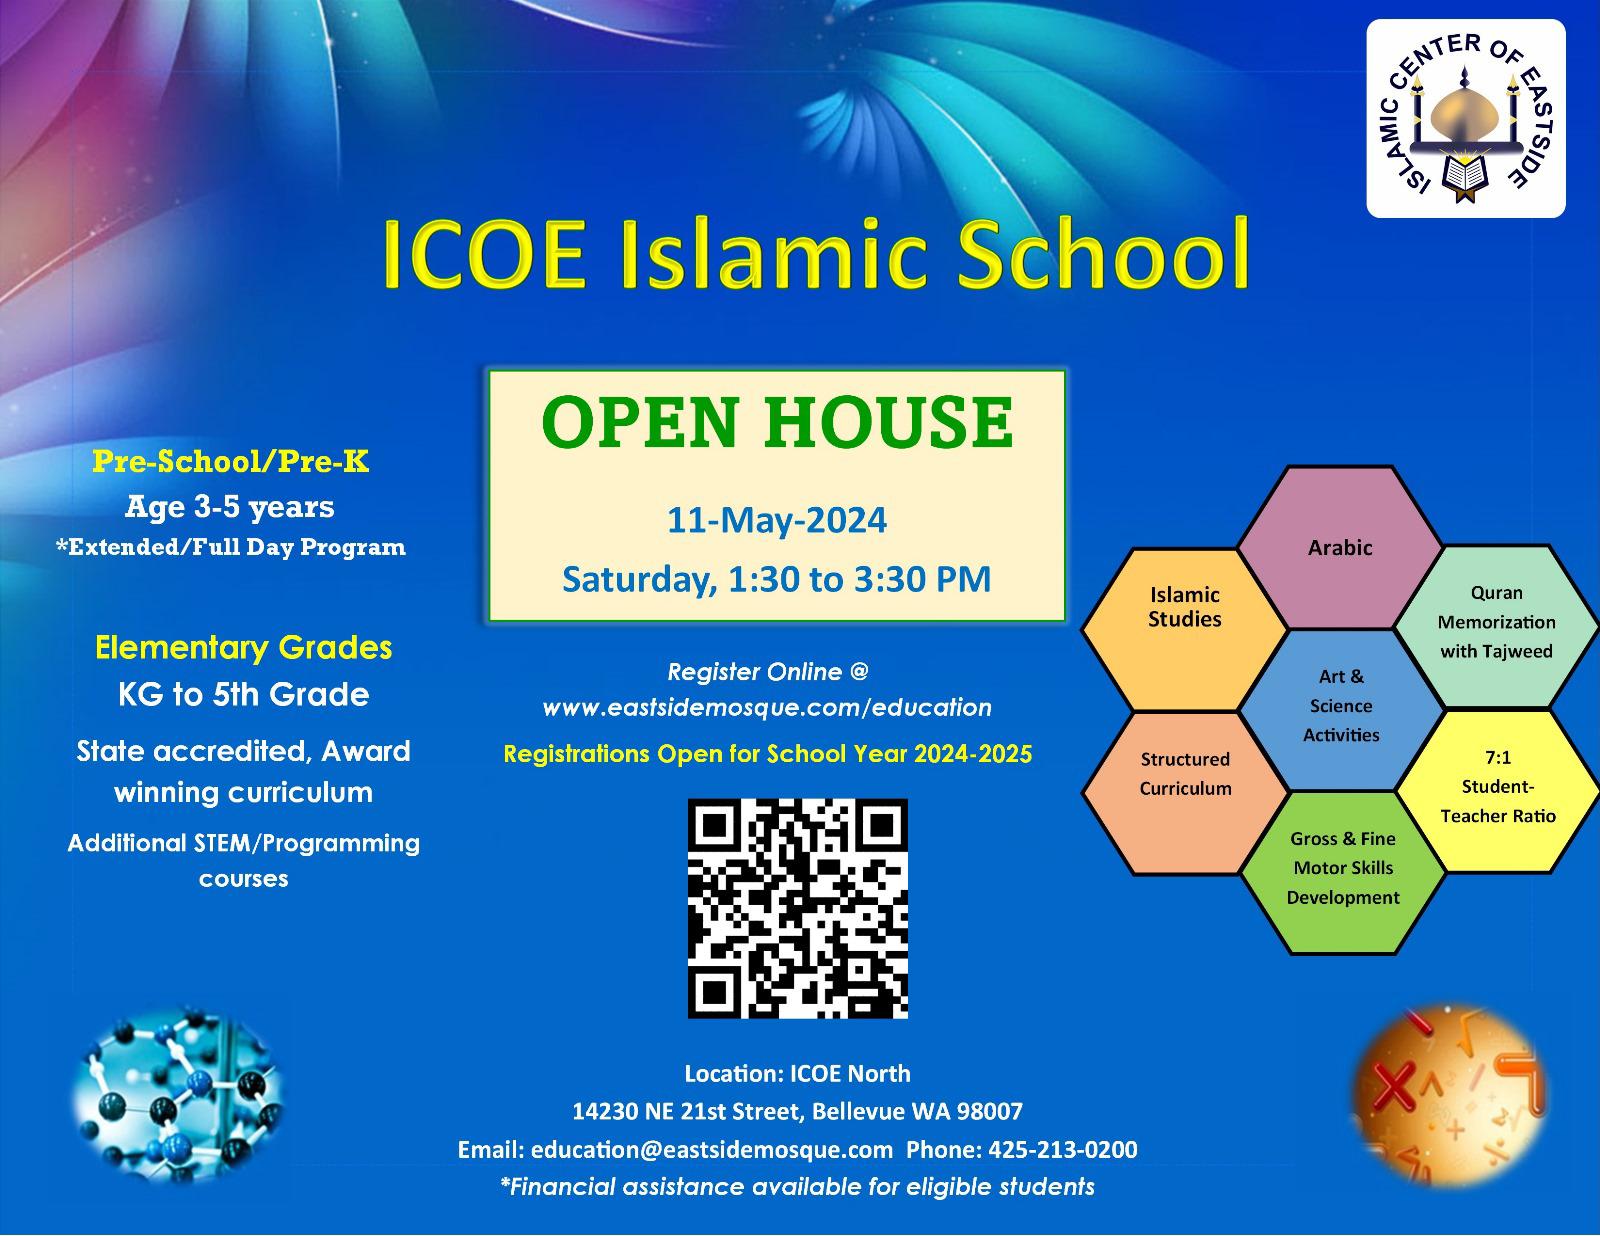 ICOE Islamic School - OPEN HOUSE